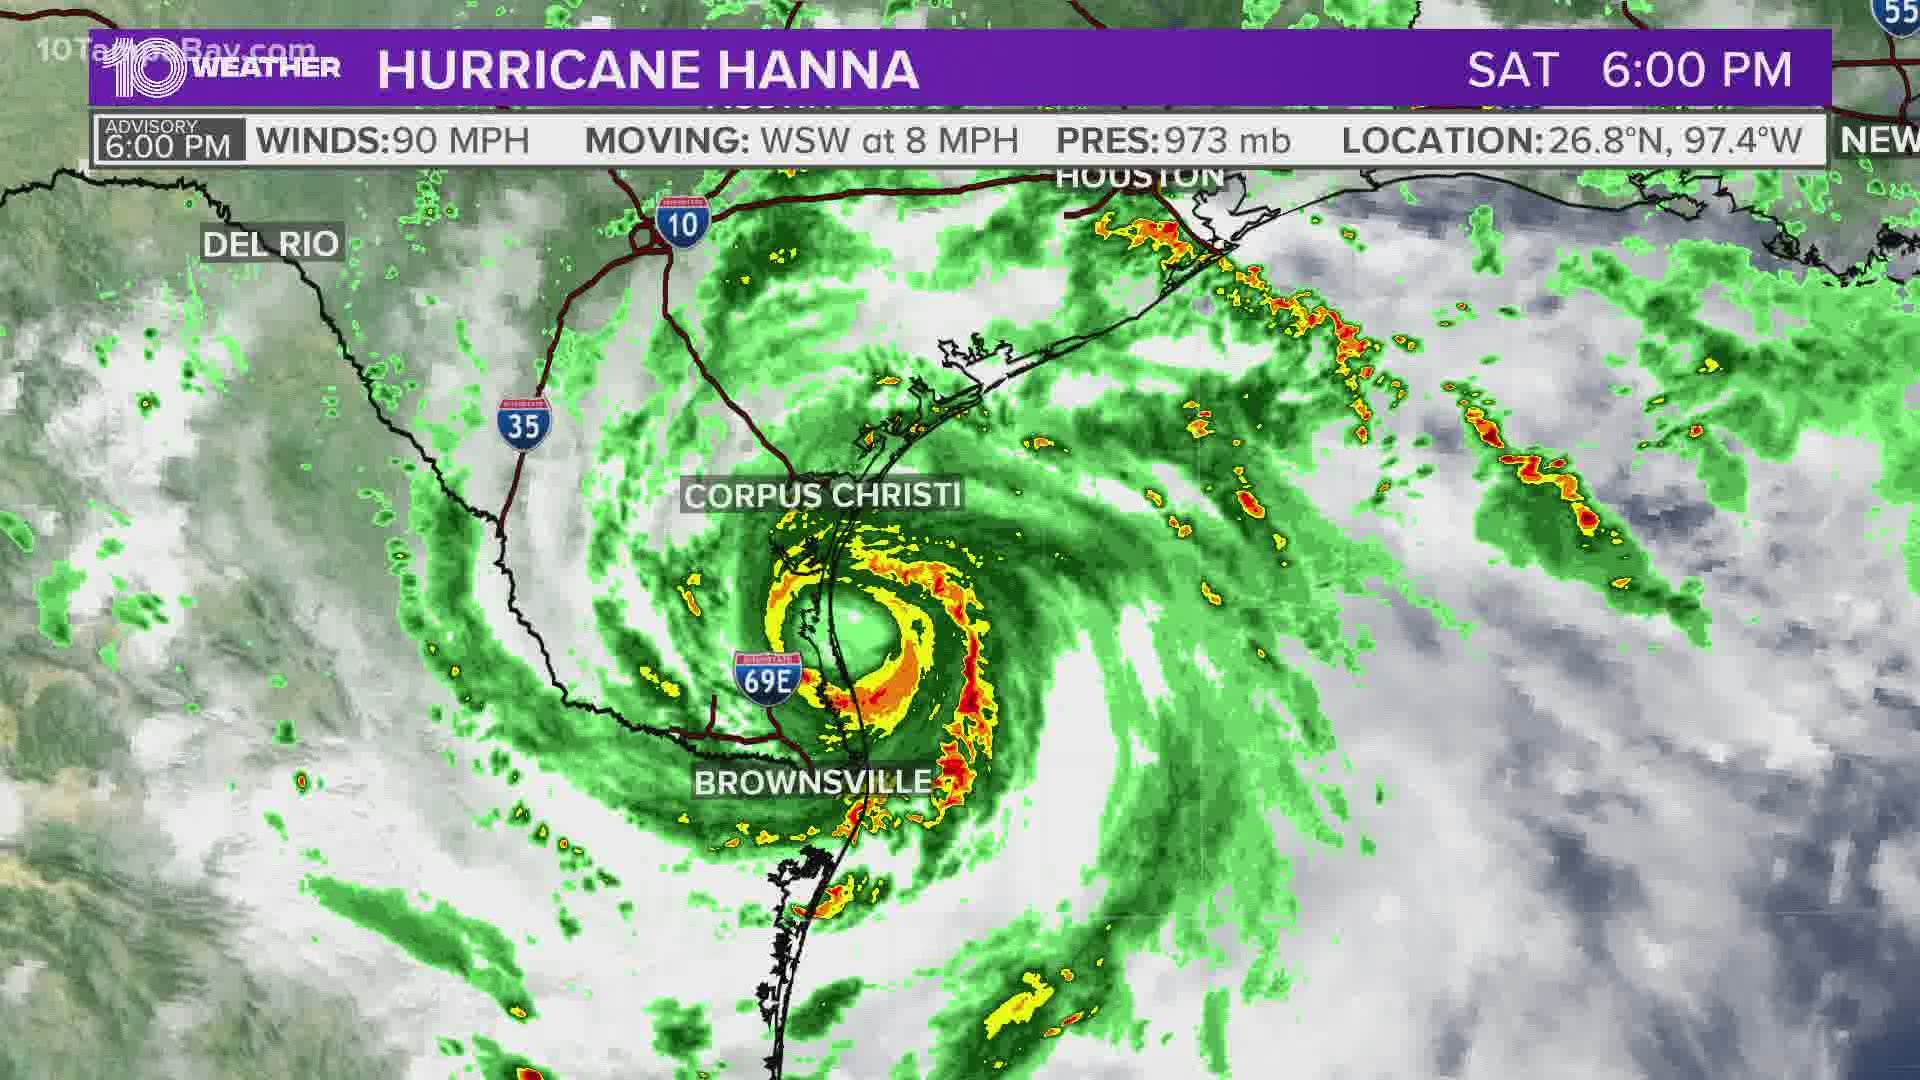 The first hurricane of the 2020 Atlantic season, Hurricane Hanna made landfall on Padre Island Saturday evening.